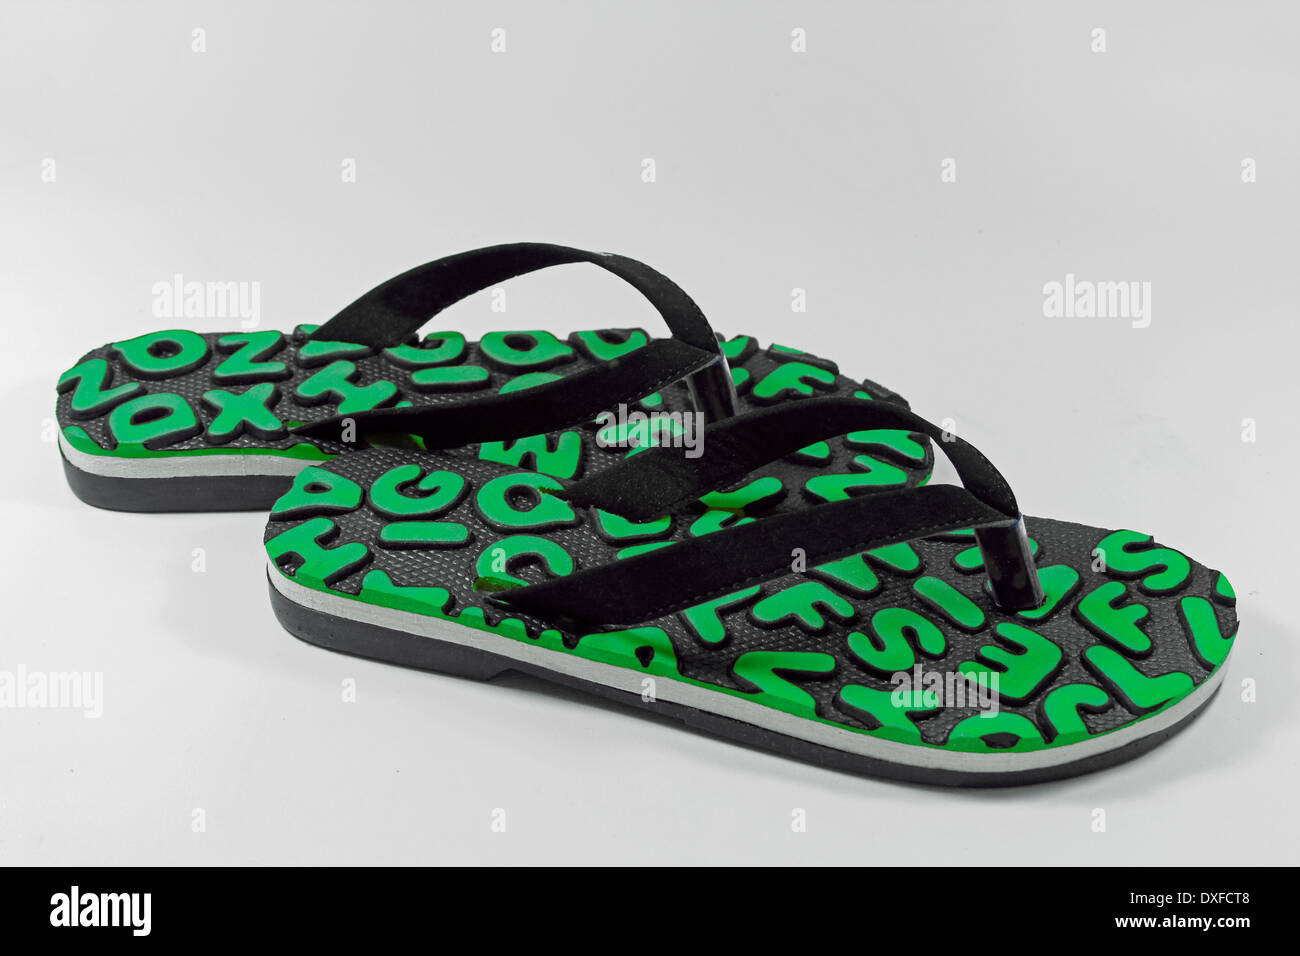 Slippers with Alphabet Design Stock Photo - Alamy